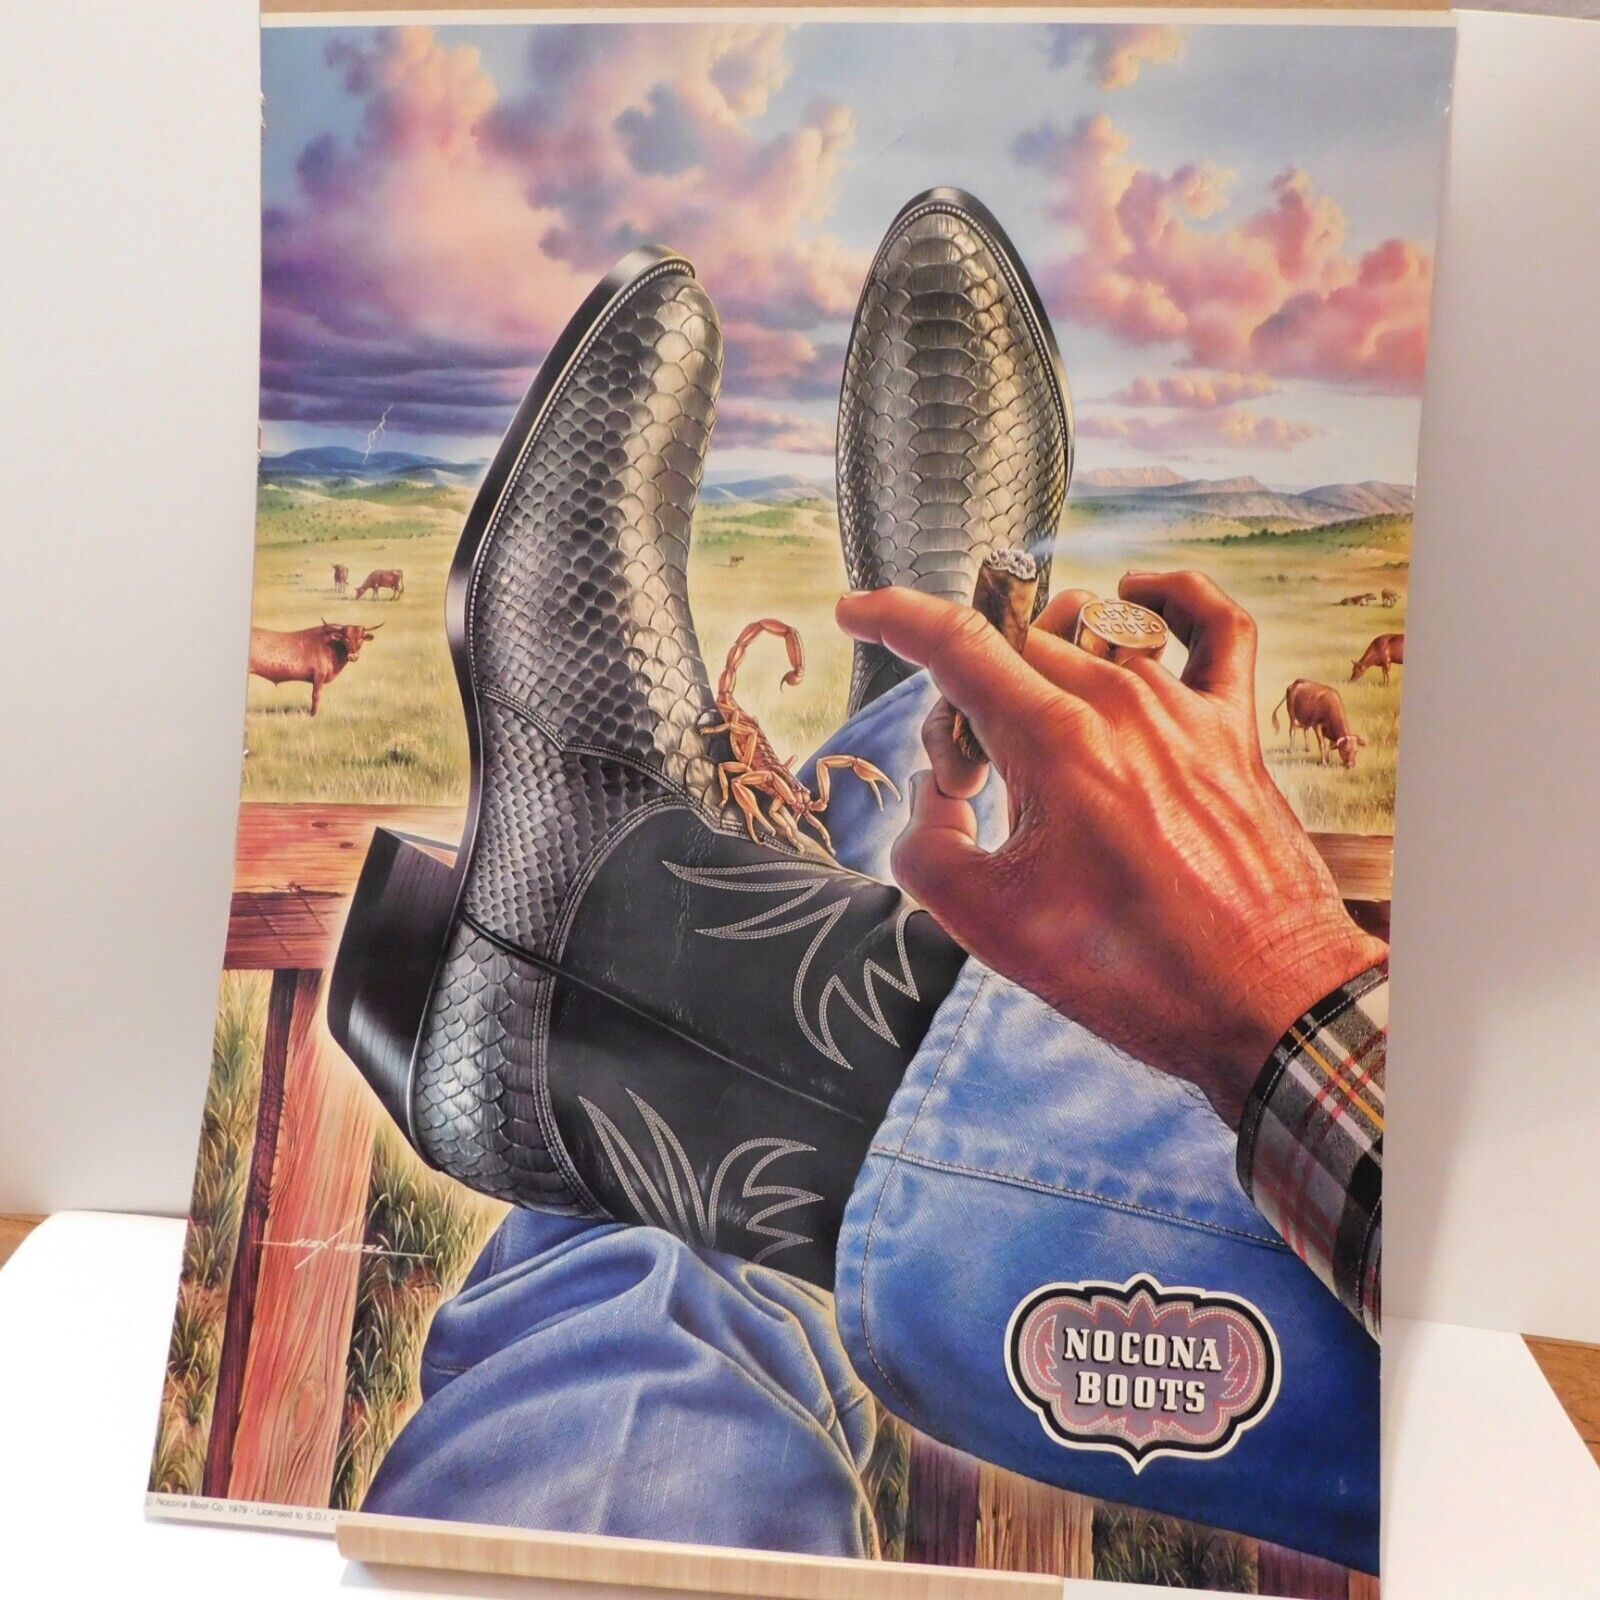 VTG Nocona Boots Advertising Poster 1979 18”x23” Western Wear Scorpion Alex Ebel